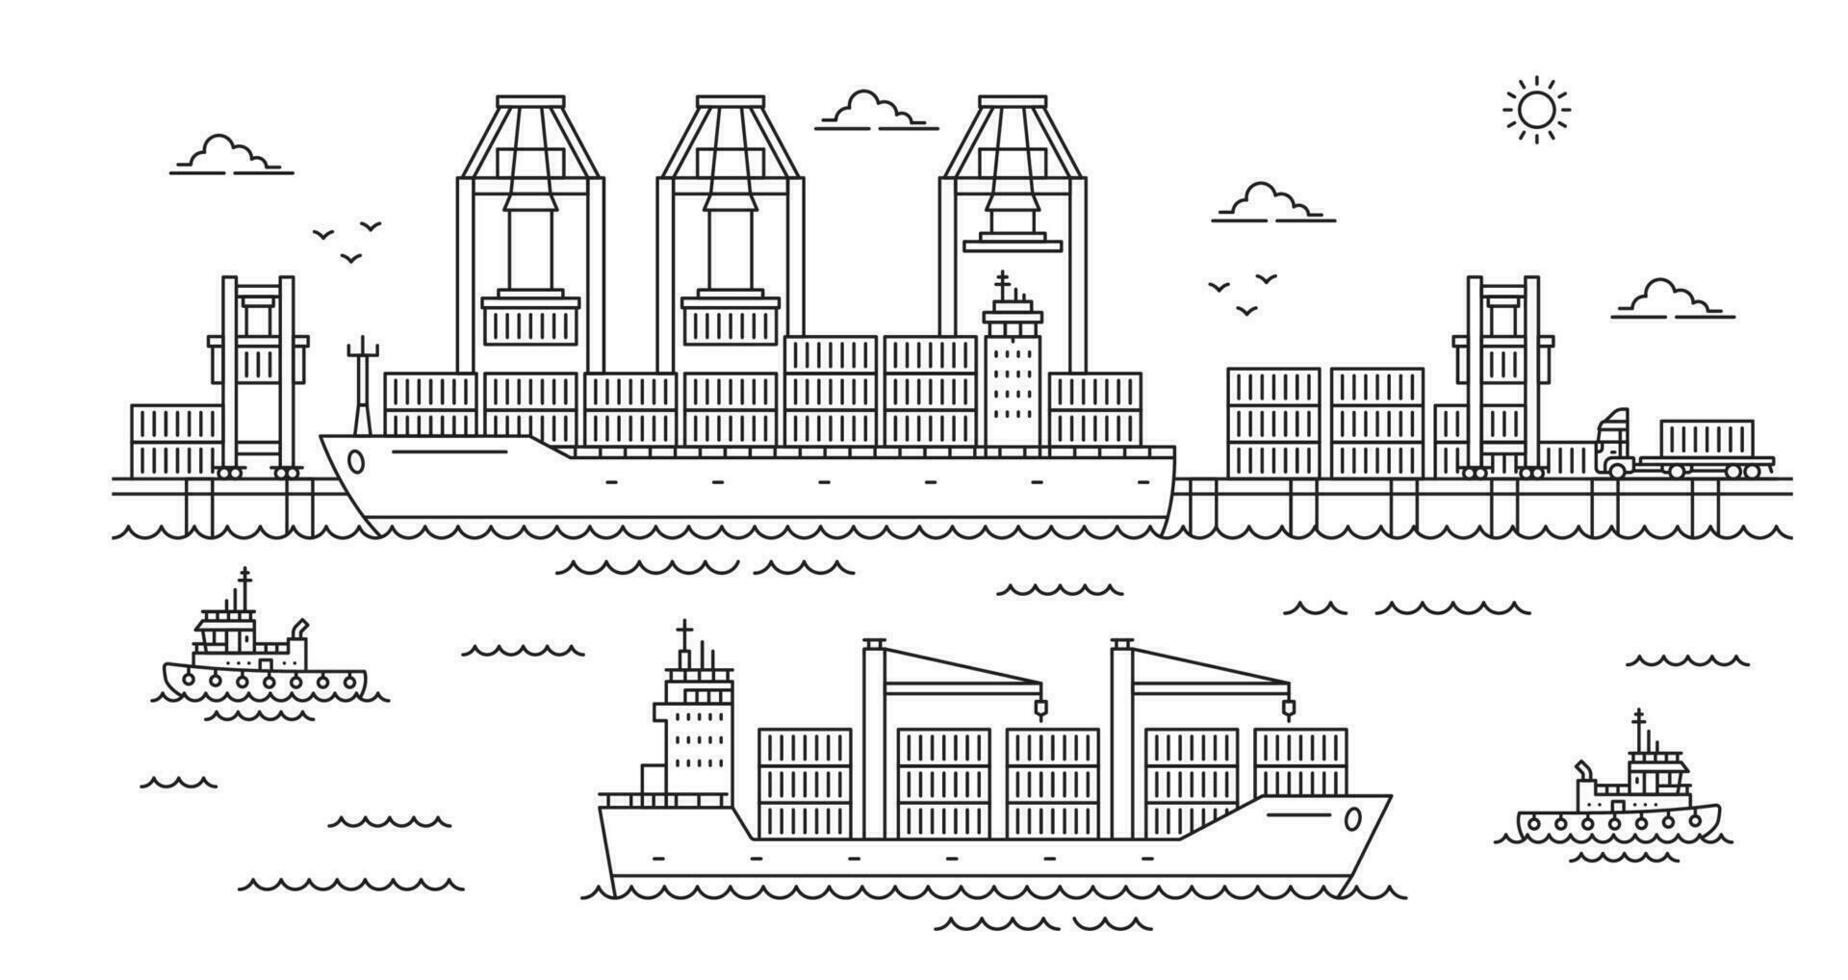 Seaport landscape, shipment hub outline background vector